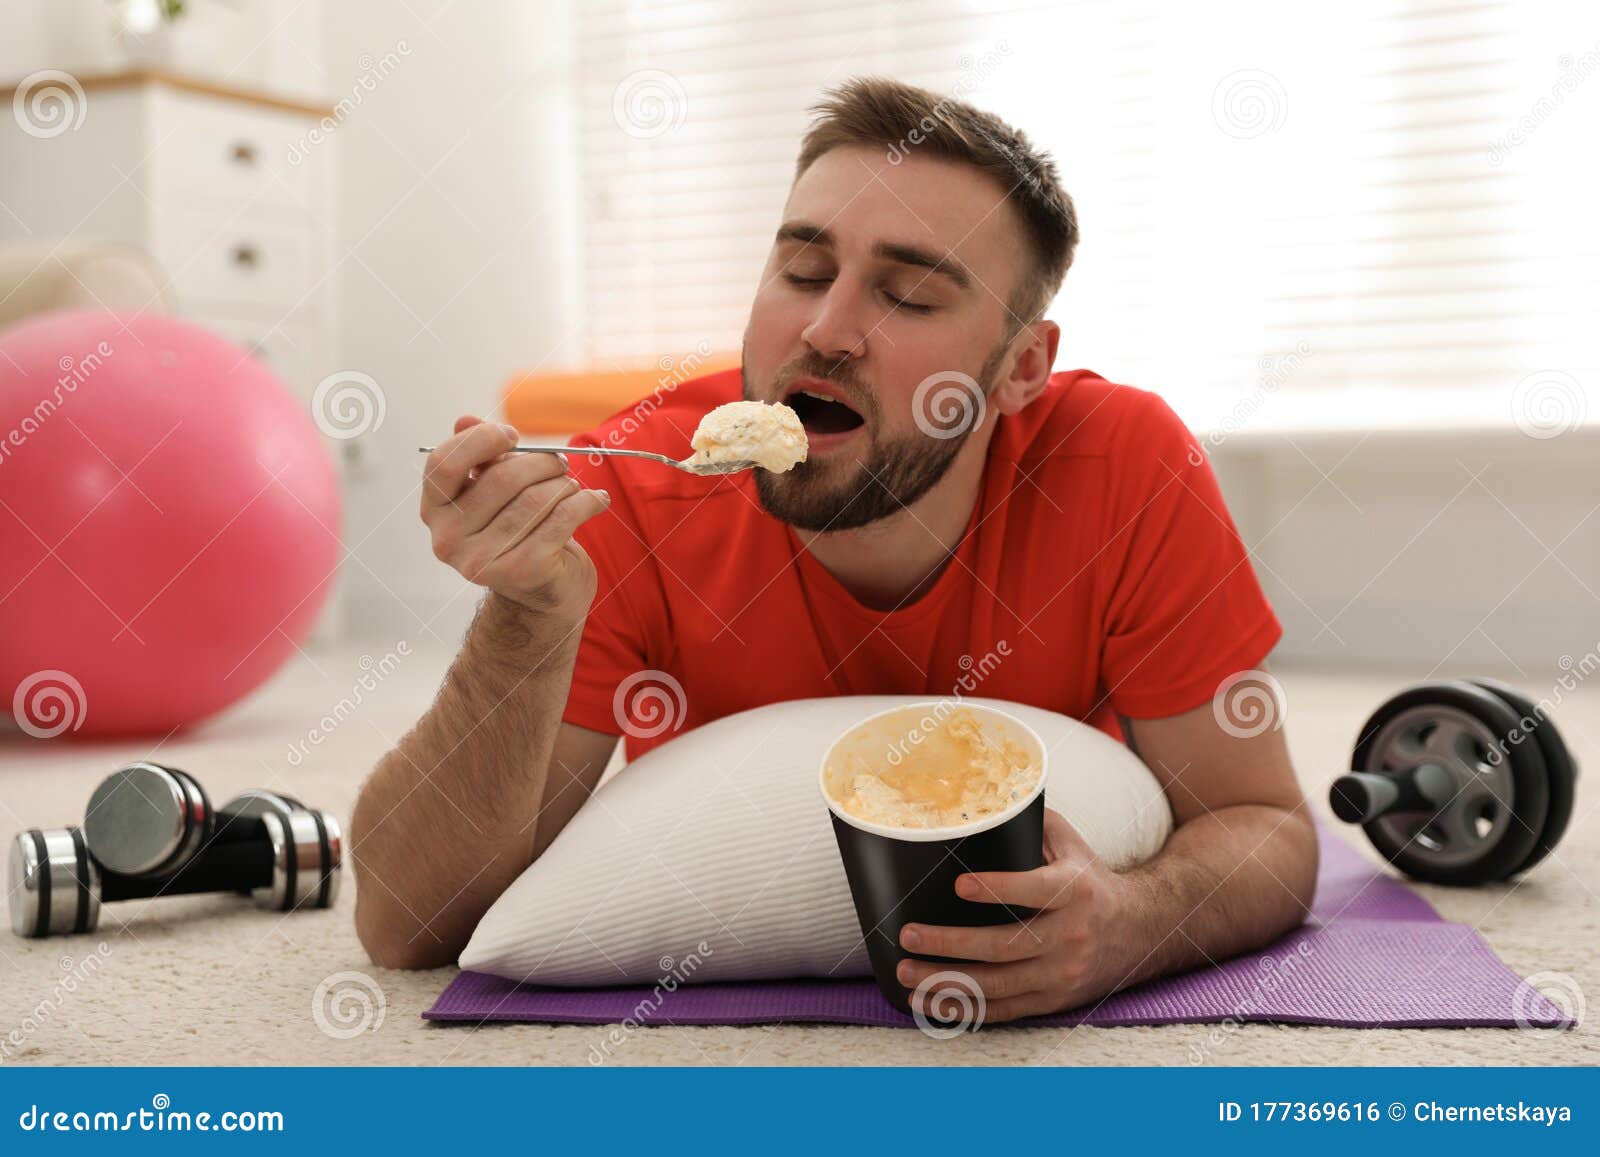 anita sui add photo blind man eating ice cream